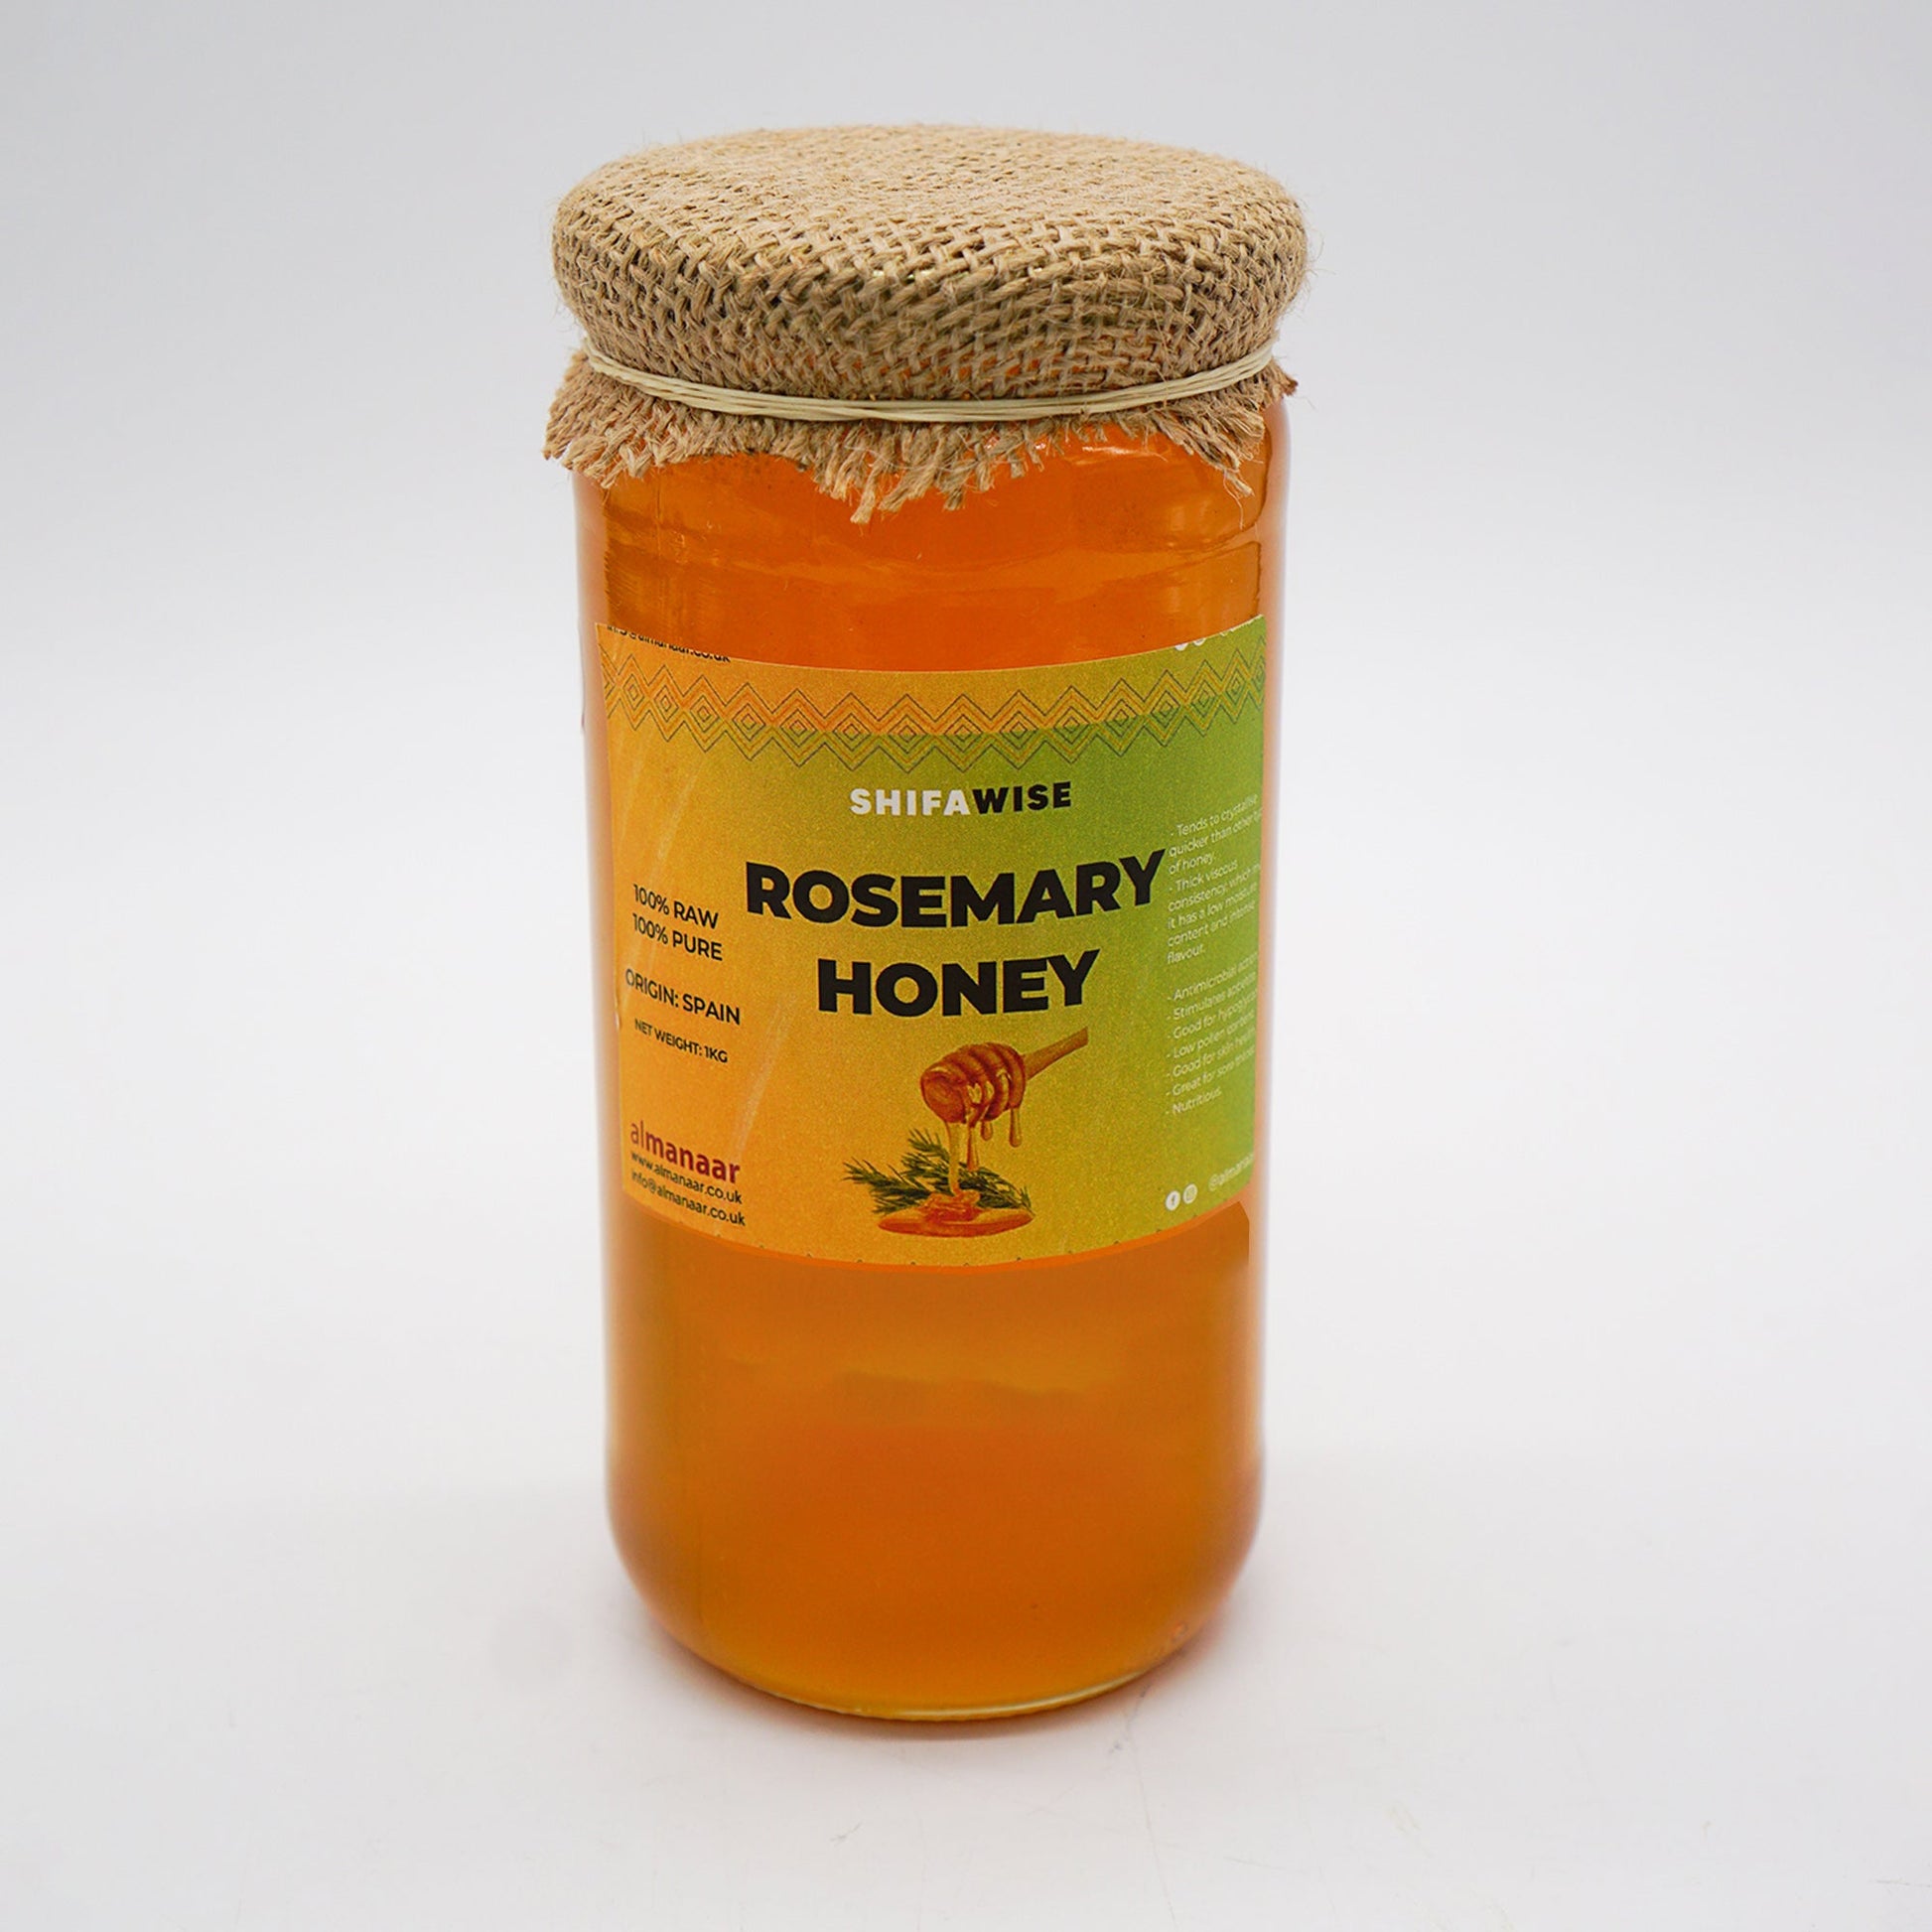 Shifawise 100% Pure Rosemary Honey-almanaar Islamic Store